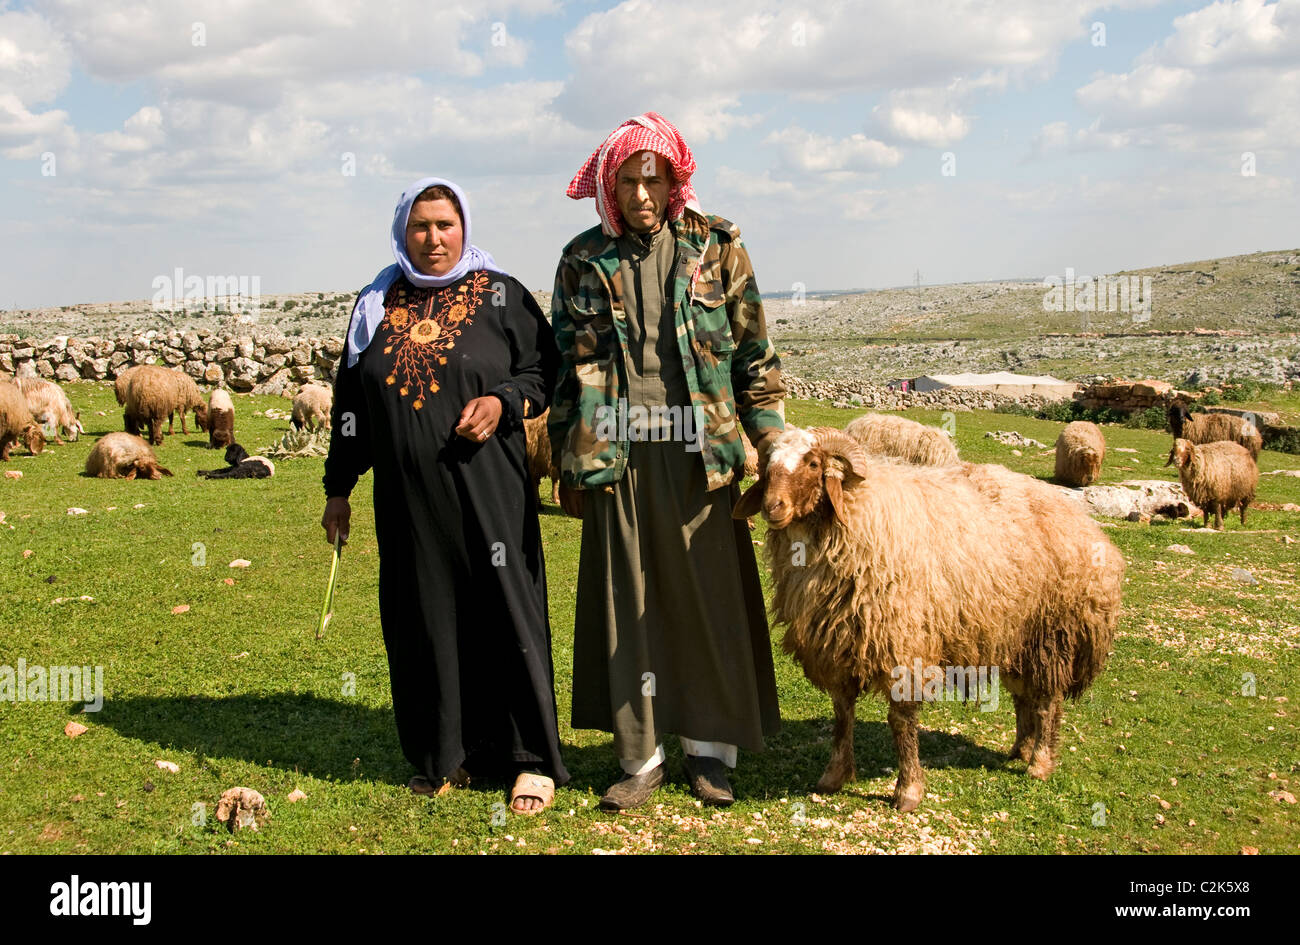 Man Woman Syria desert farm farmer sheep Bedouin  Bedouins Stock Photo